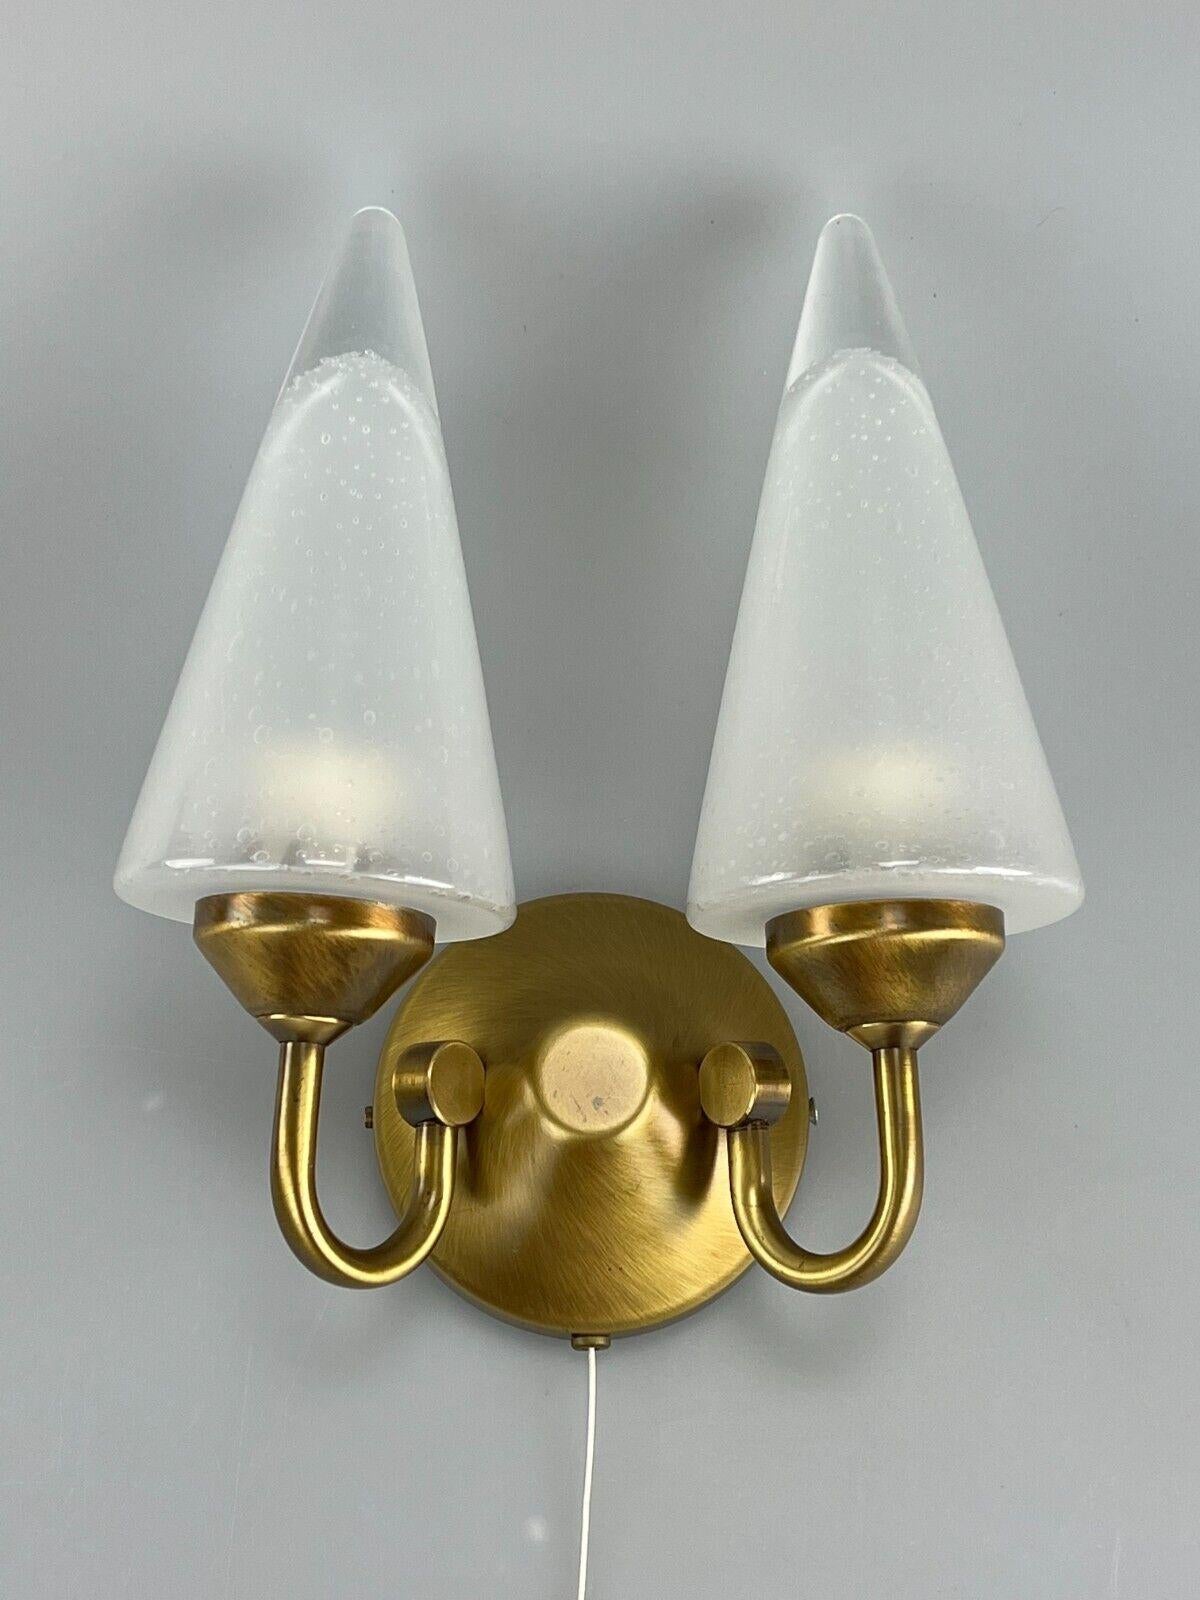 70s lampshade